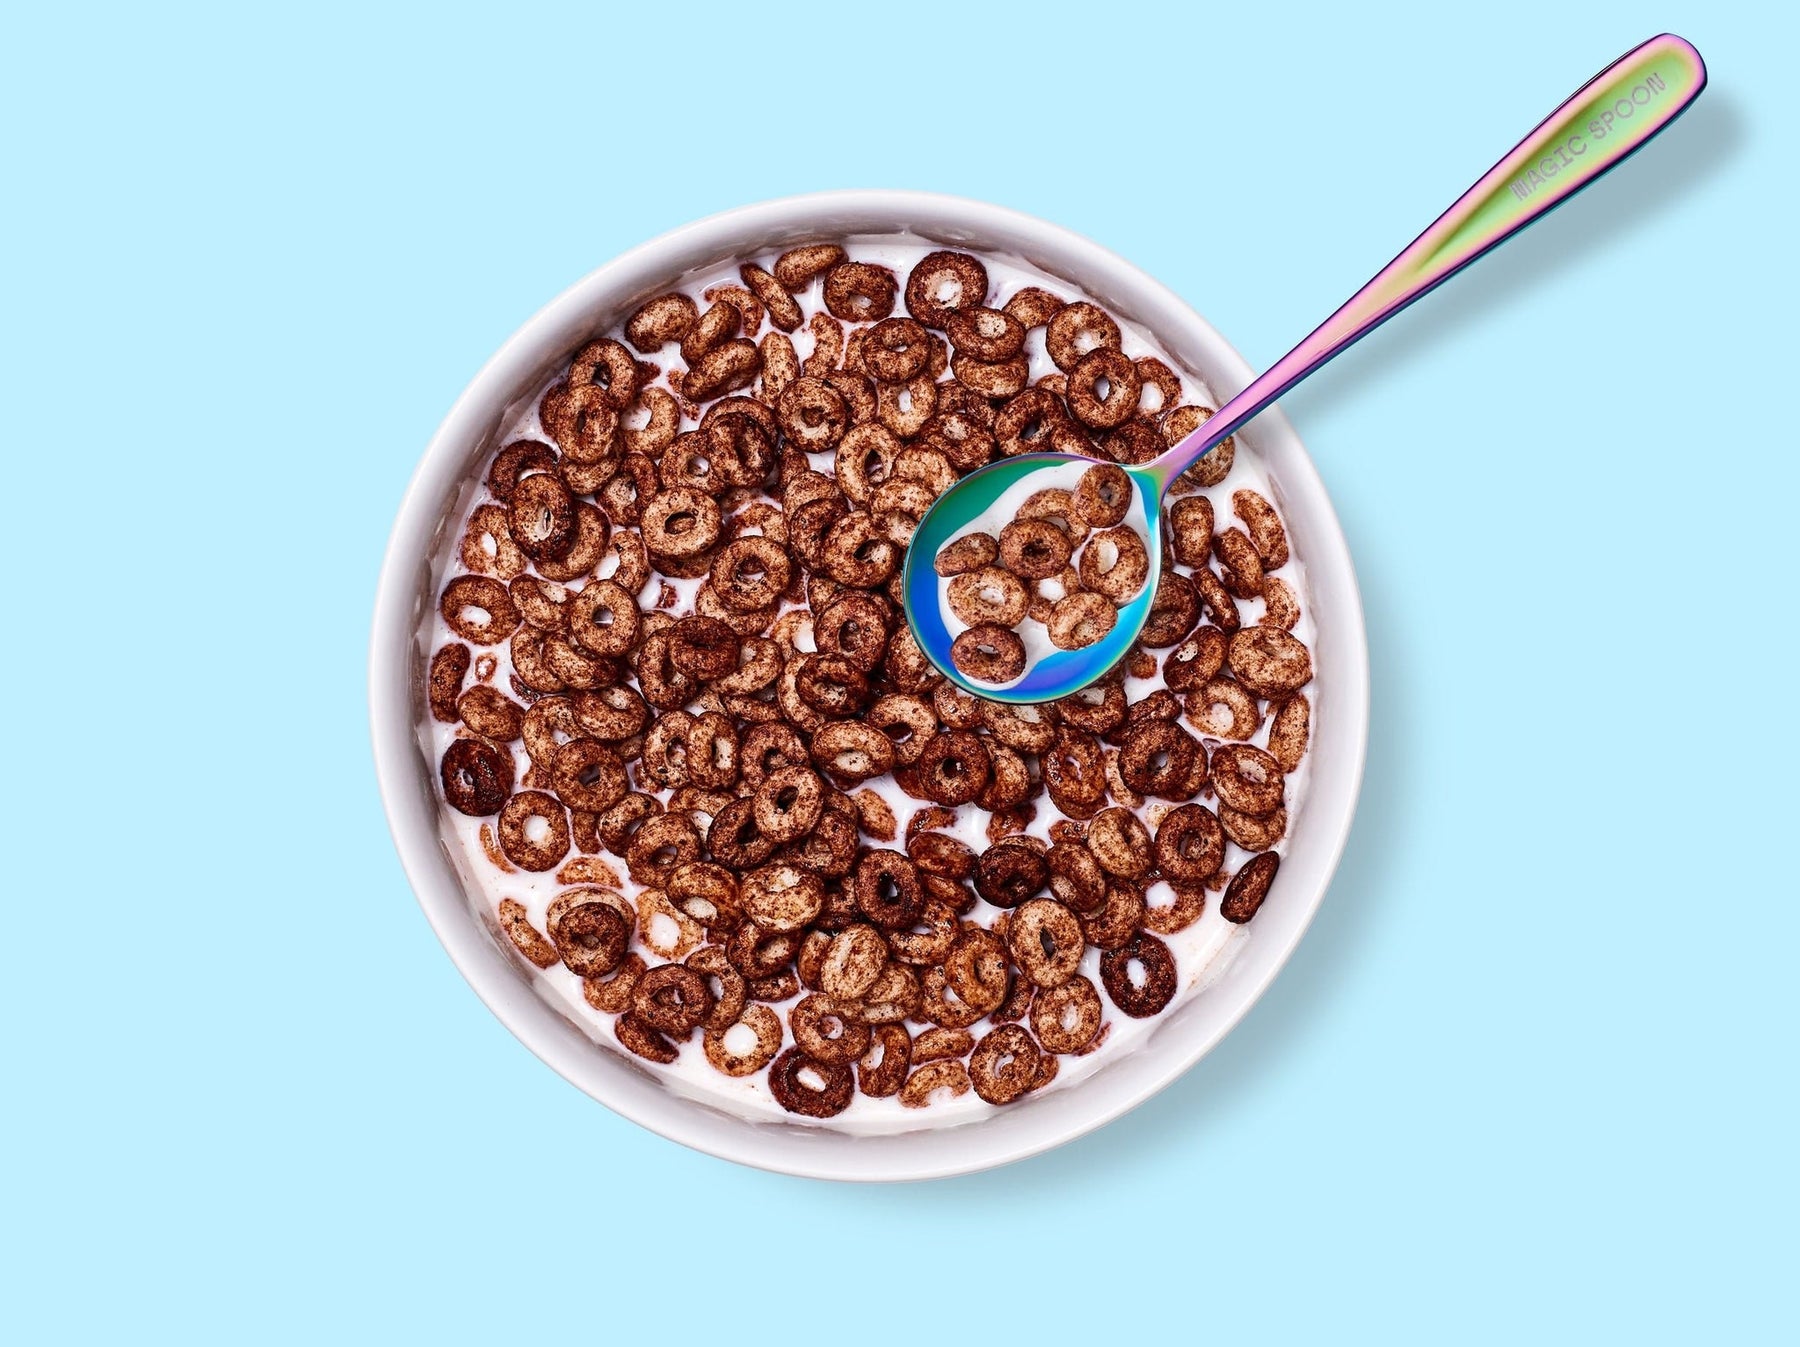 Magic Spoon - High Protein Grain Free Cereal - 7oz